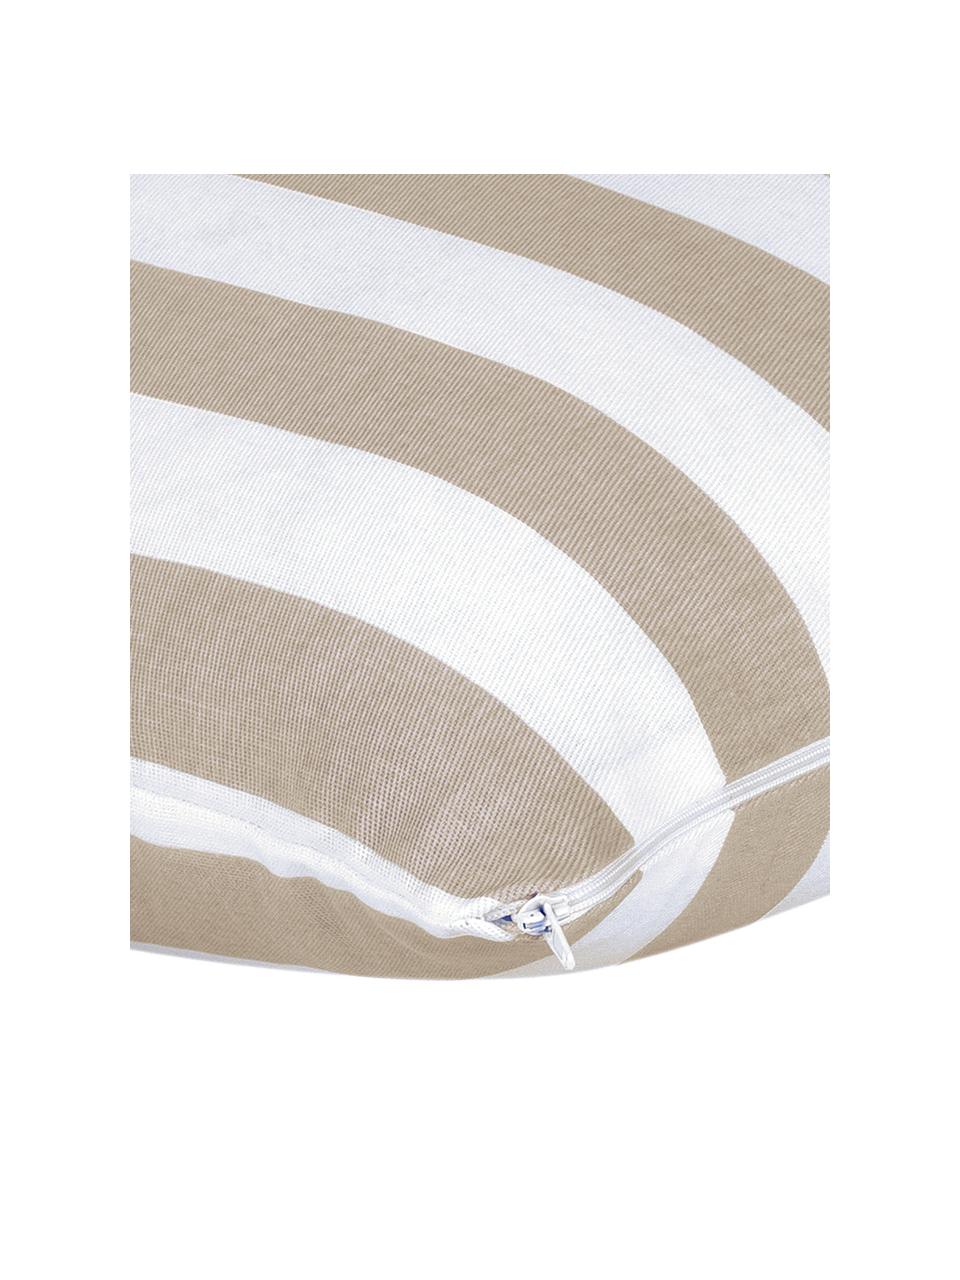 Gestreepte kussenhoes Timon in beige/wit, 100% katoen, Taupe, wit, B 45 x L 45 cm